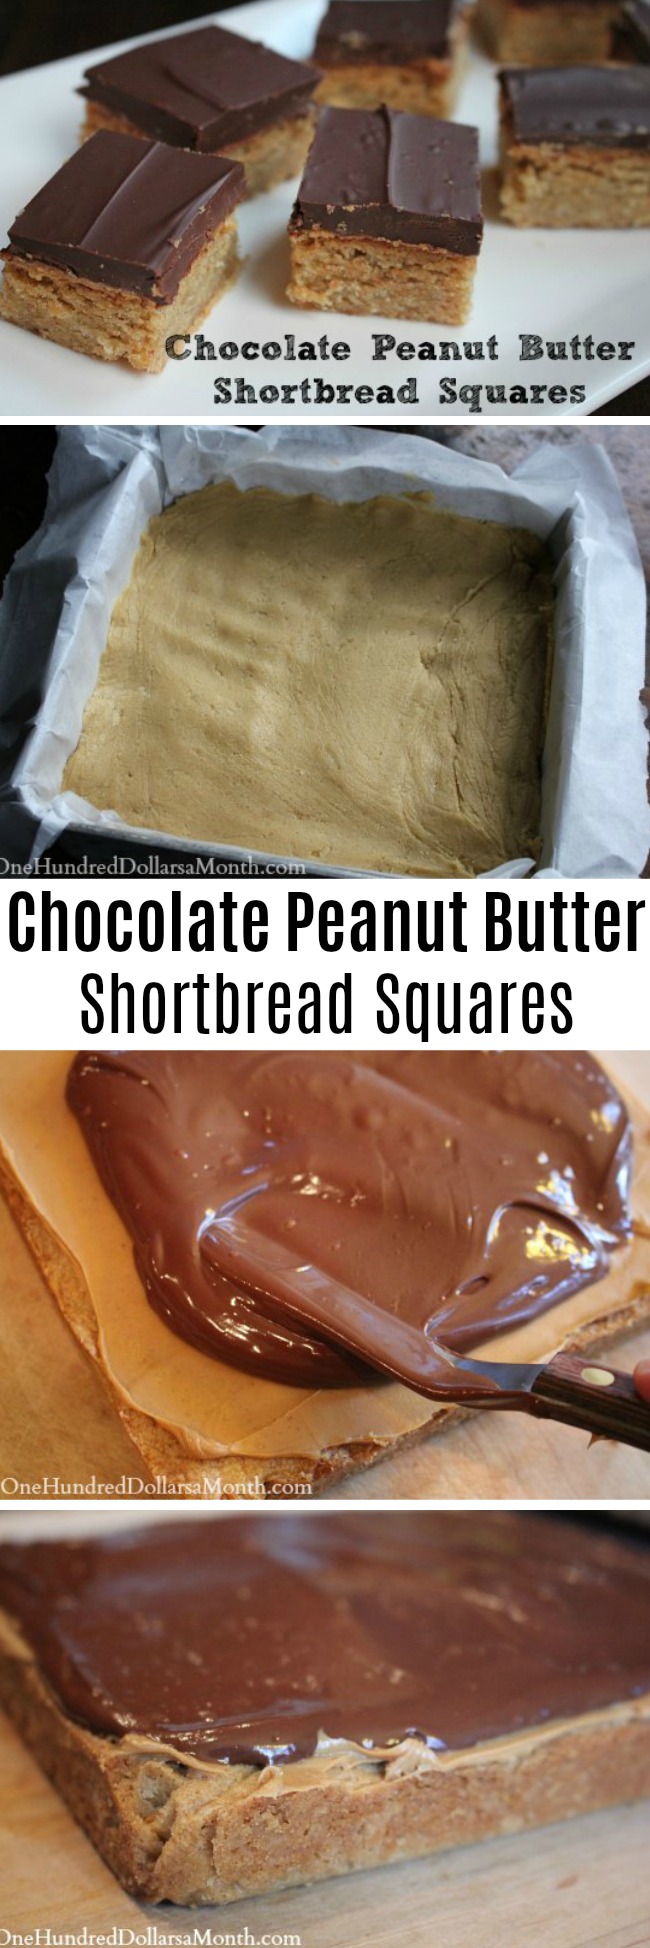 Chocolate Peanut Butter Shortbread Squares